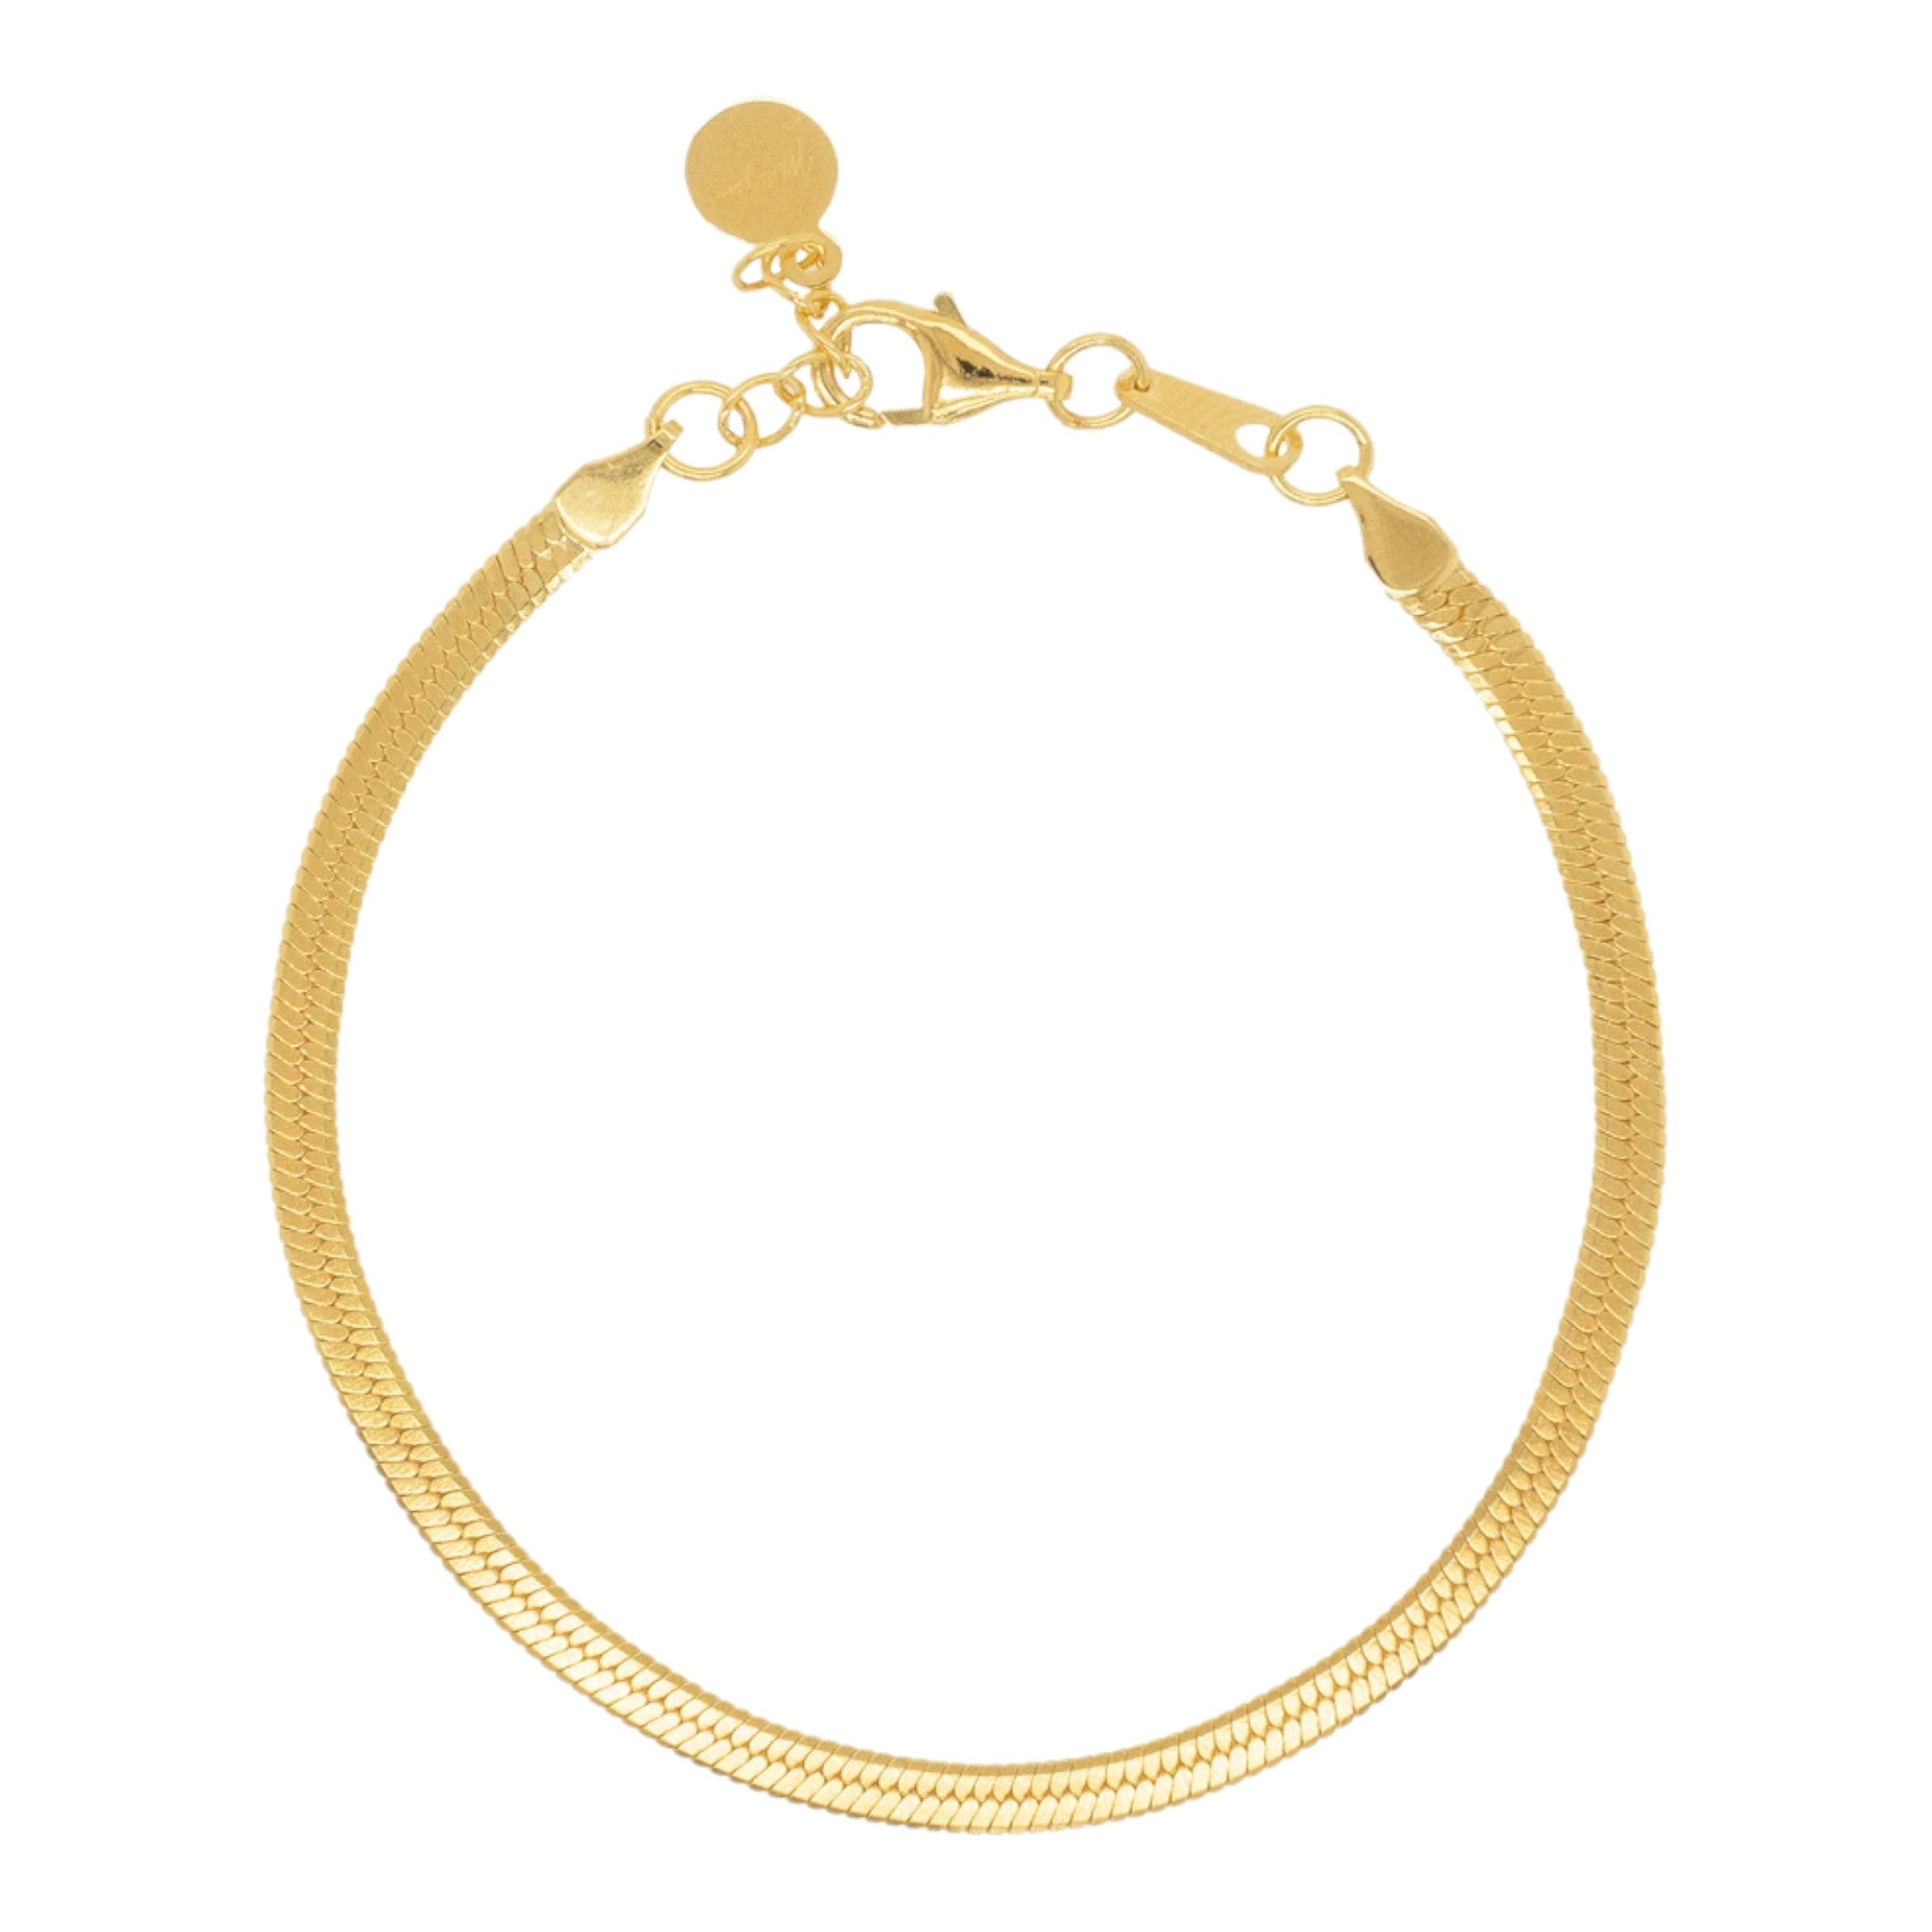 Mod + Jo - Florence Herringbone Bracelet - Gold Vermeil